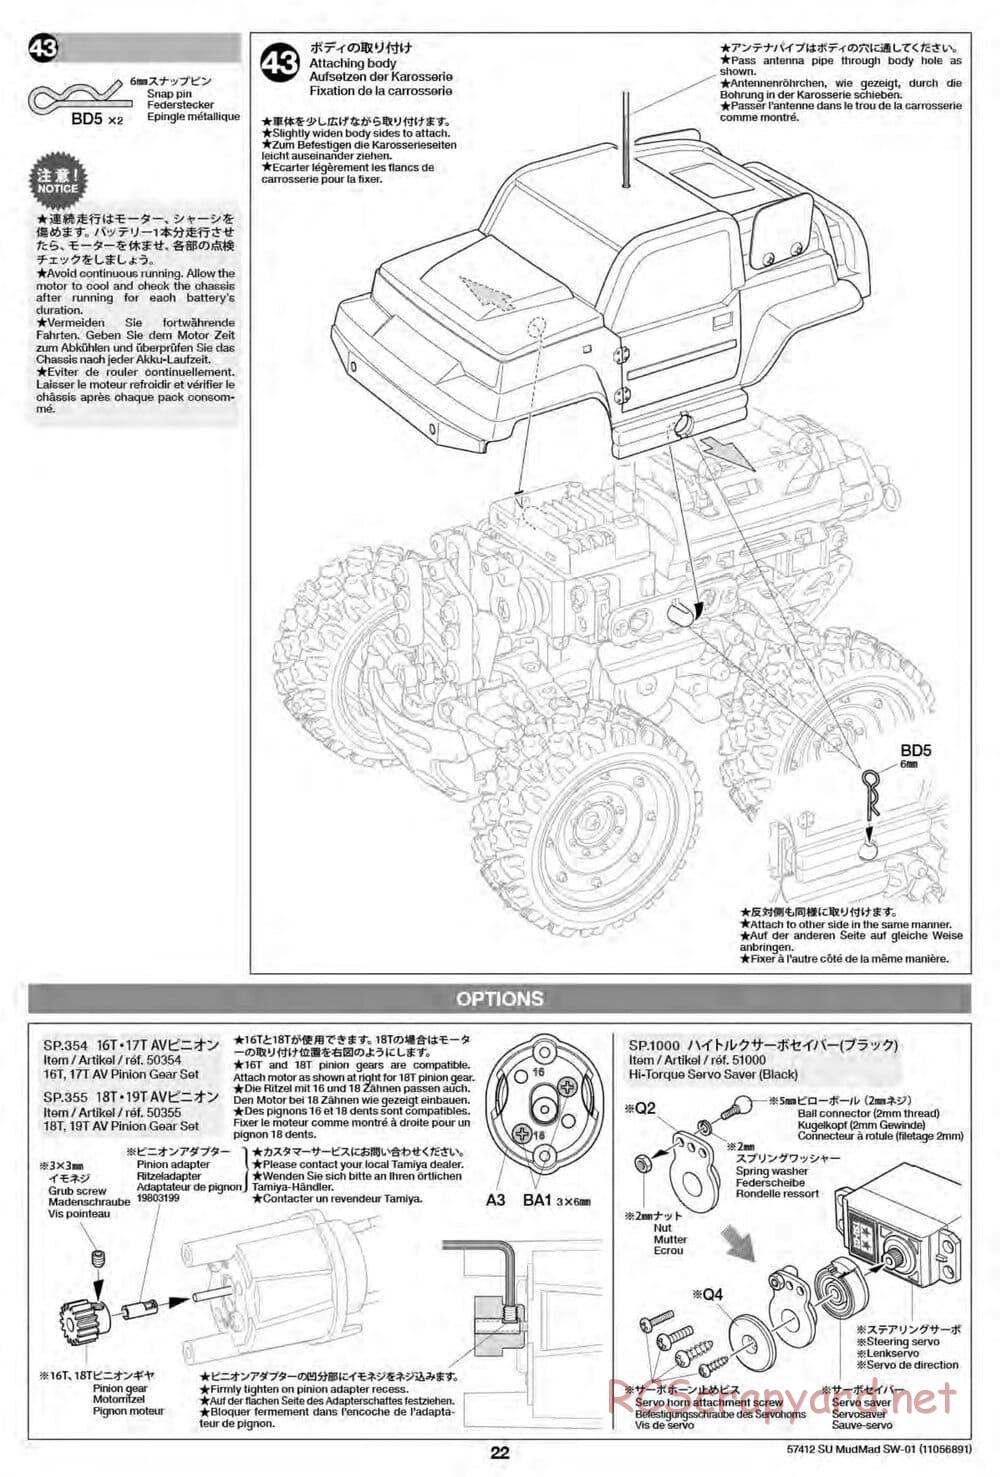 Tamiya - MudMad - SW-01 Chassis - Manual - Page 22